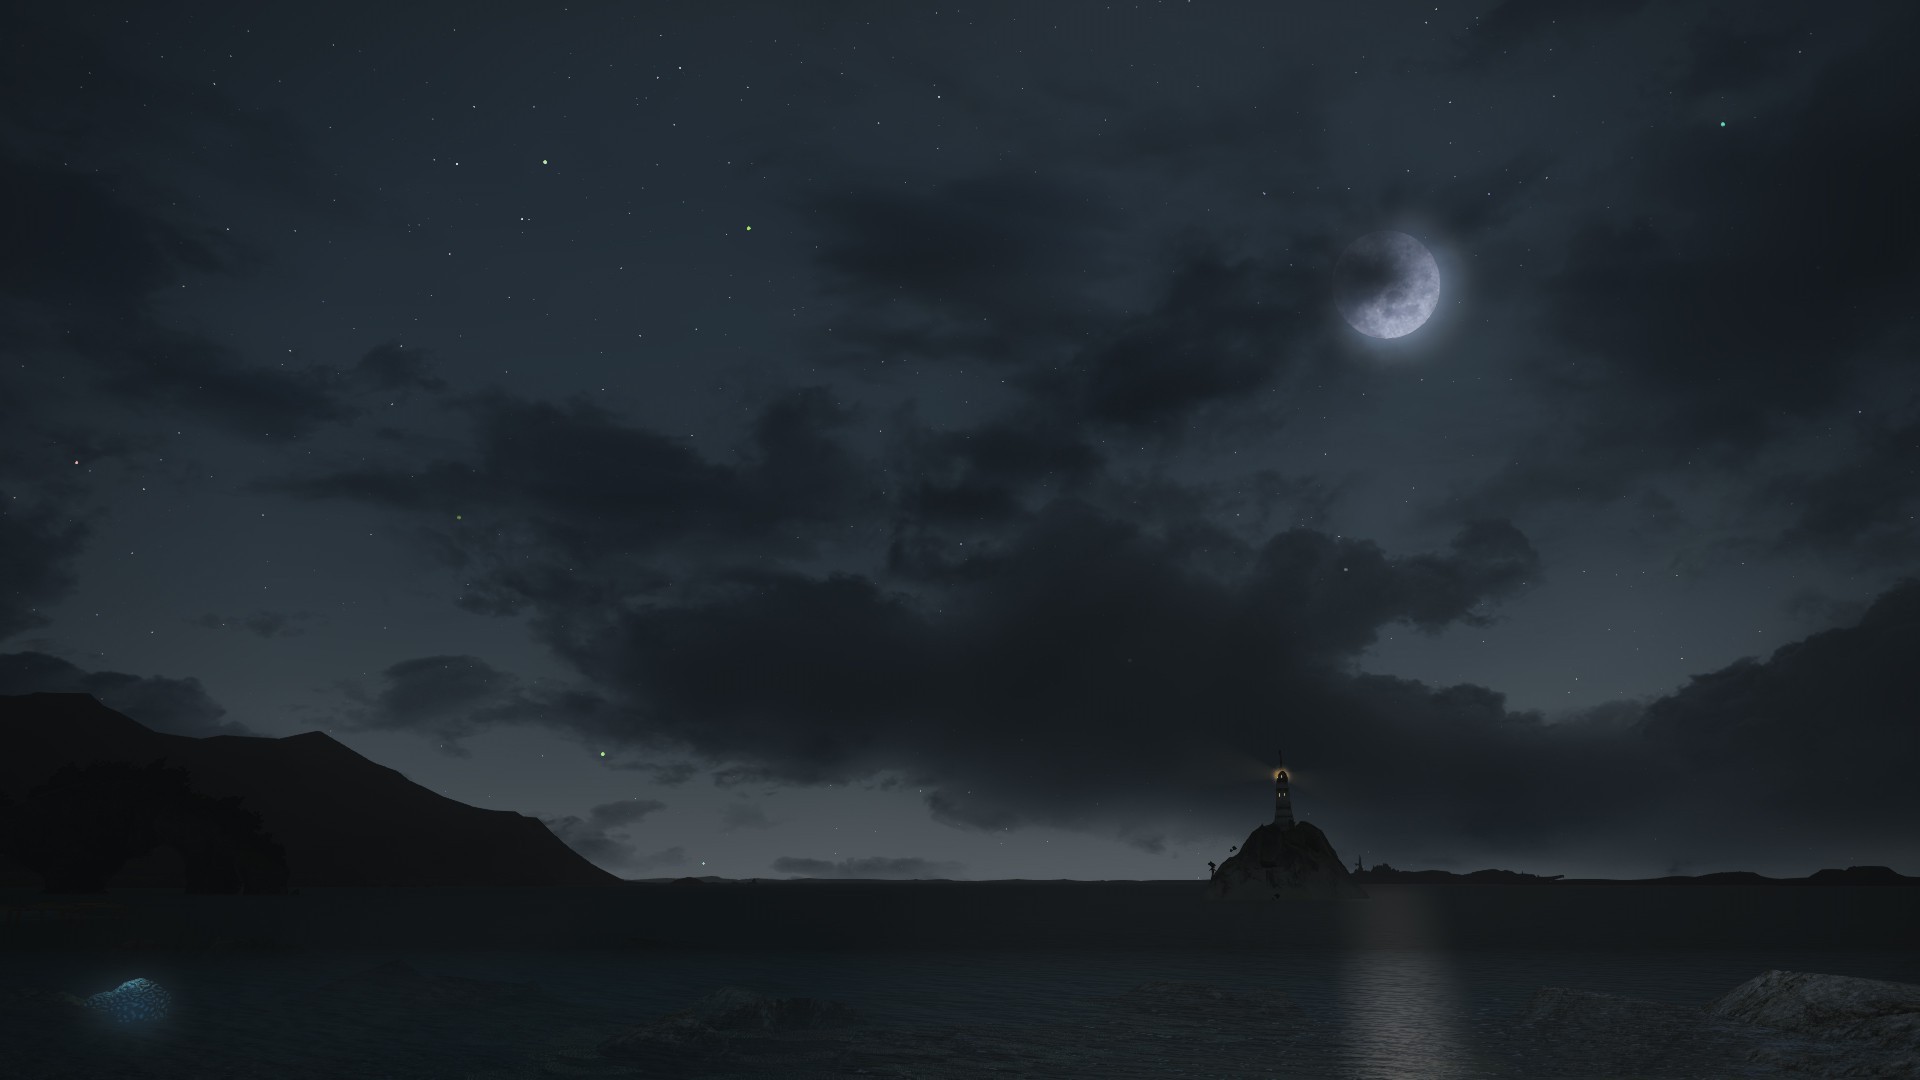 General 1920x1080 digital art minimalism landscape lighthouse night Moon clouds sea cliff rocks stars reflection